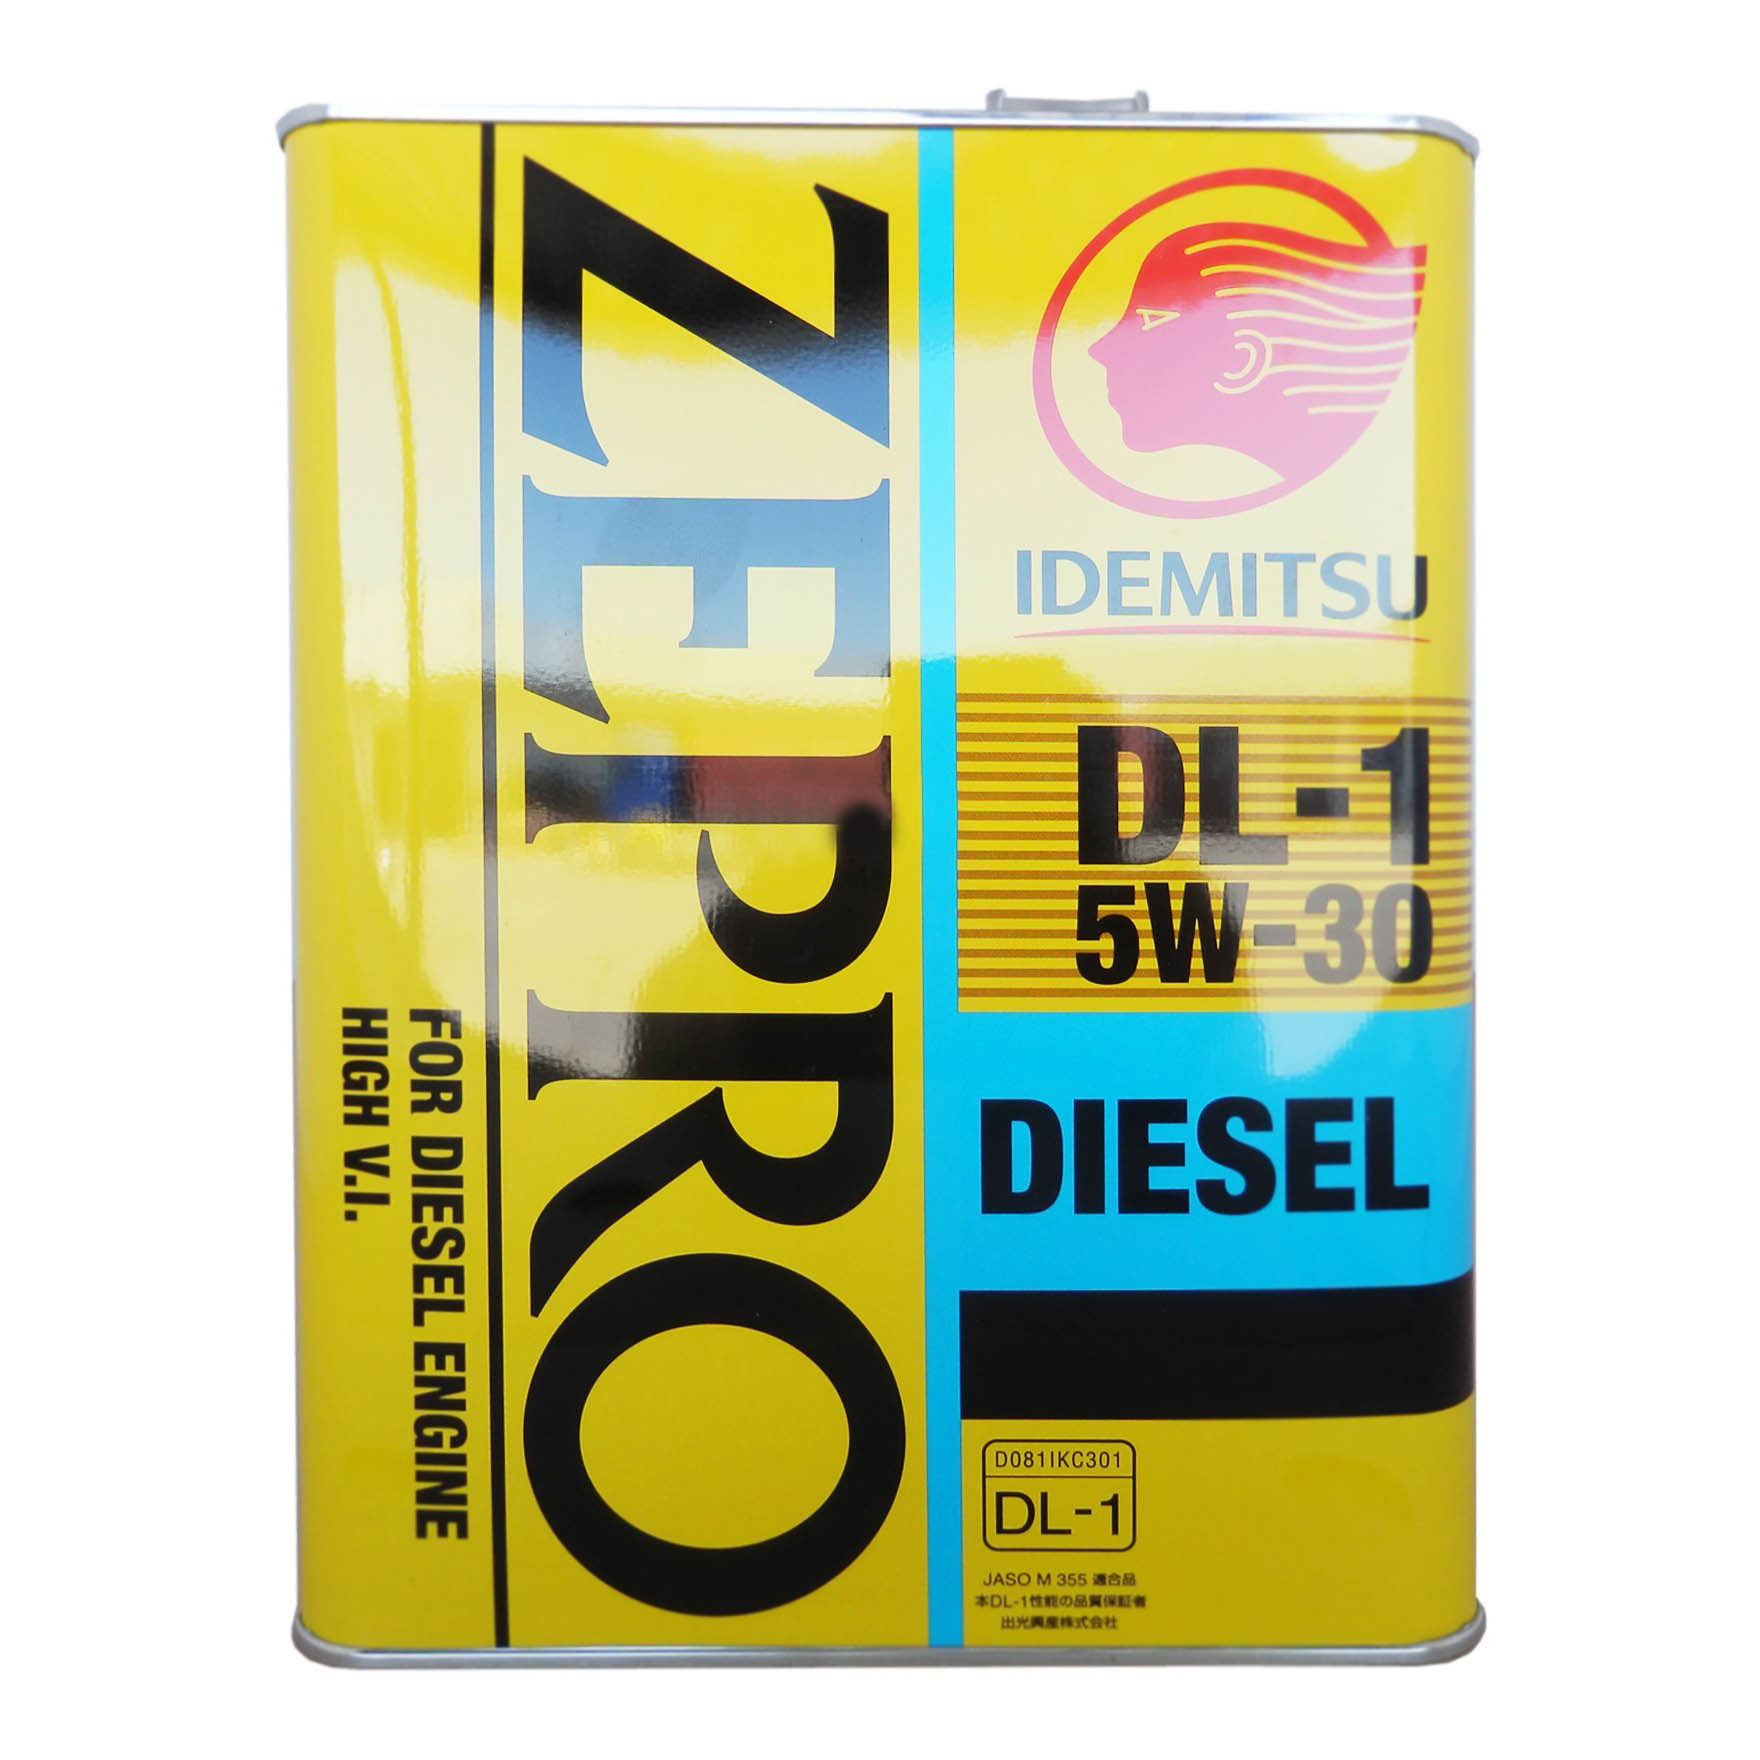 фото Idemitsu масло idemitsu 5/30 zepro diesel dl-1 acea c2-08 4л